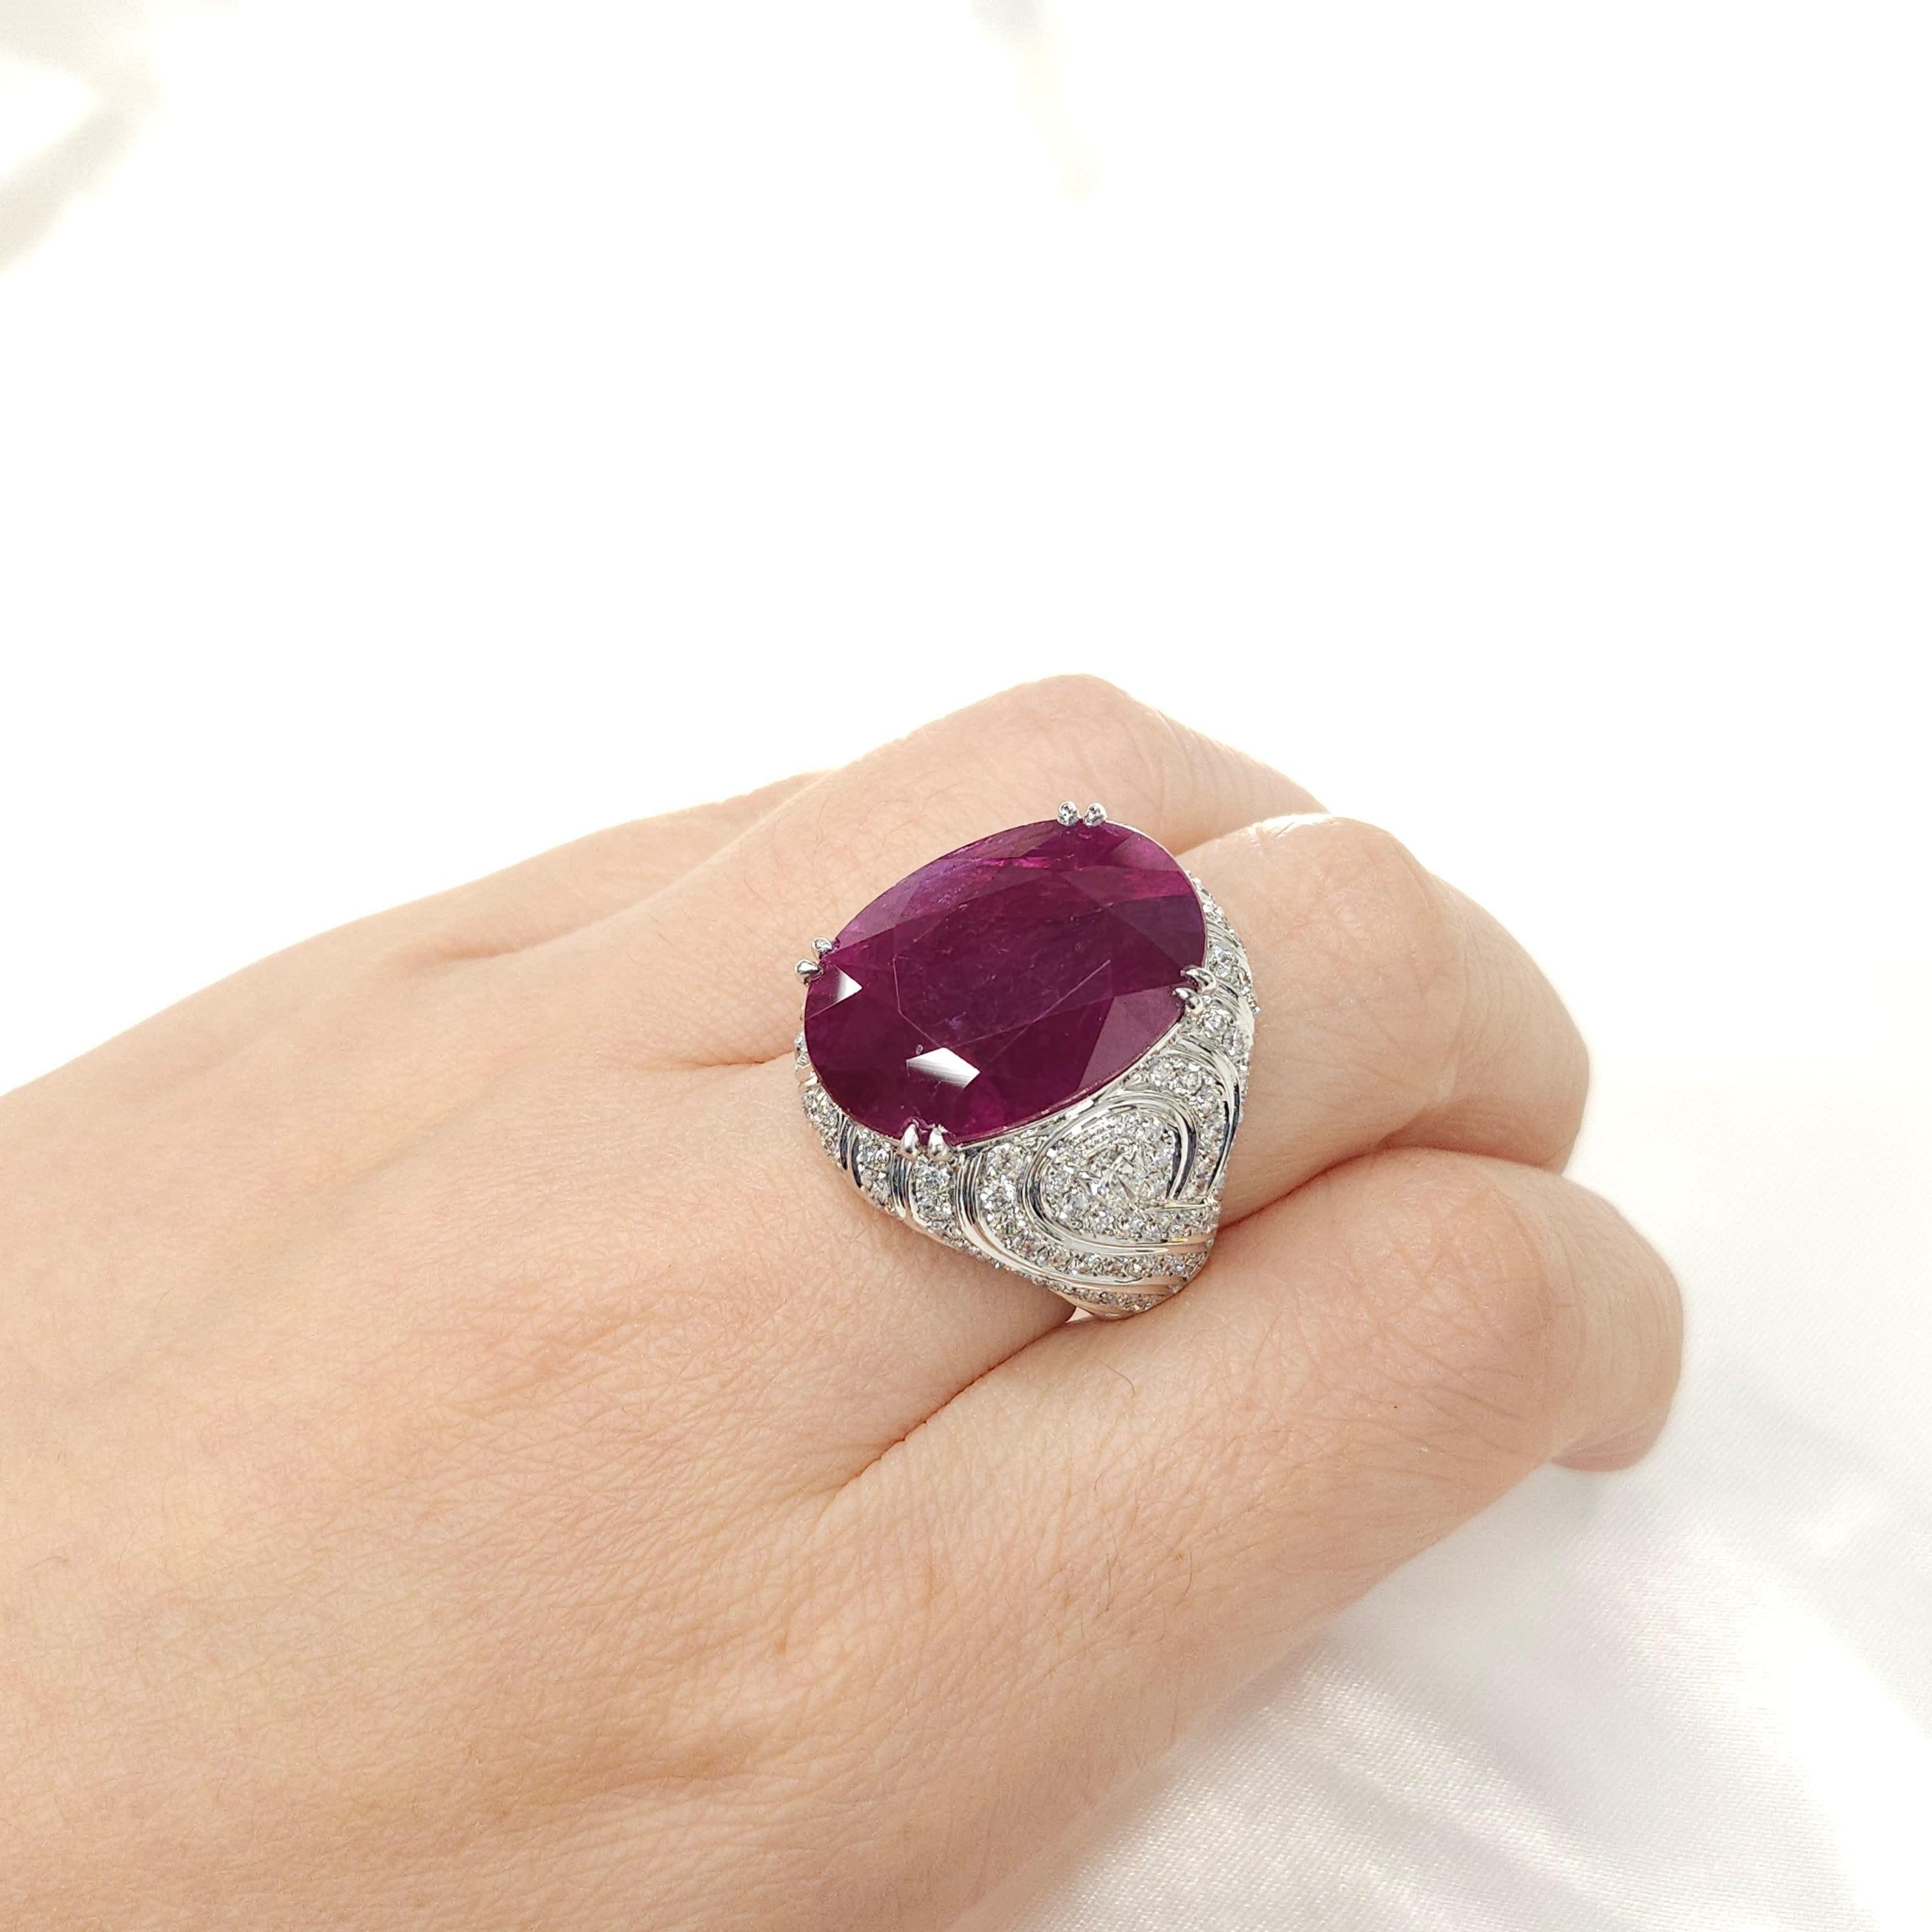 IGI Certified Rare 25.49 Carat Burma Ruby & Diamond Ring in 18K White Gold For Sale 10